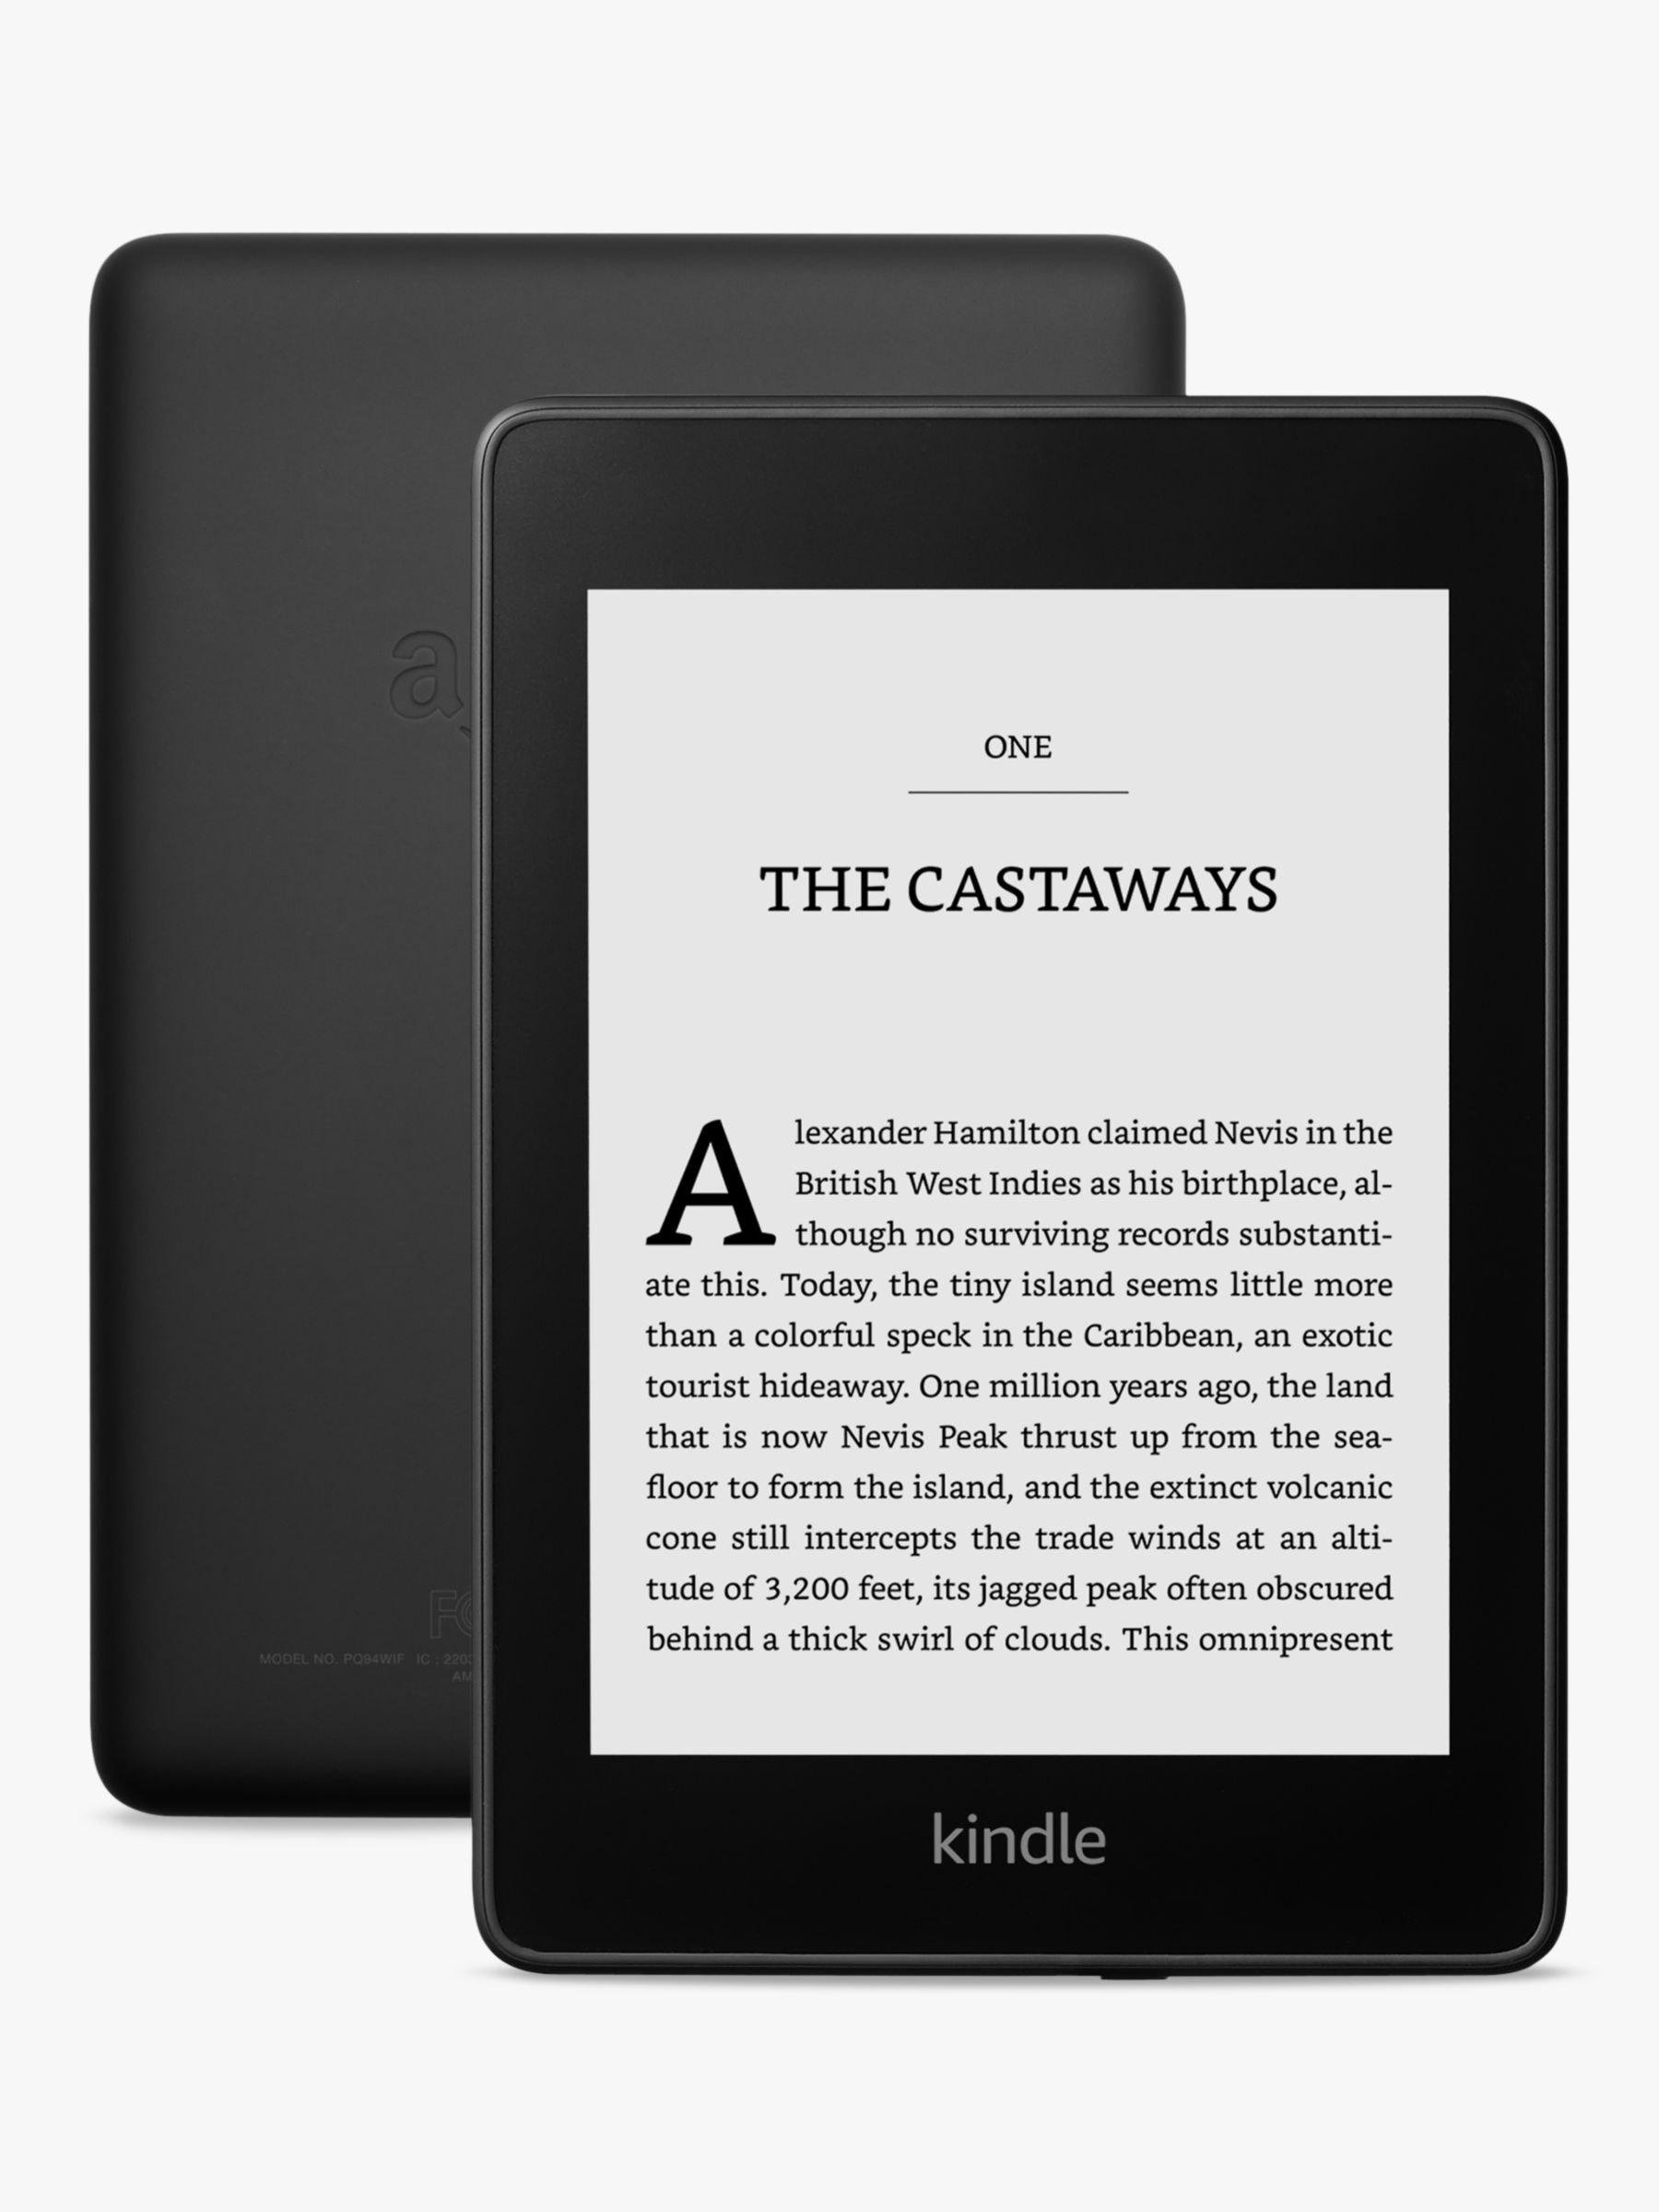 Amazon Kindle Paperwhite, Waterproof eReader, 6" High Resolution